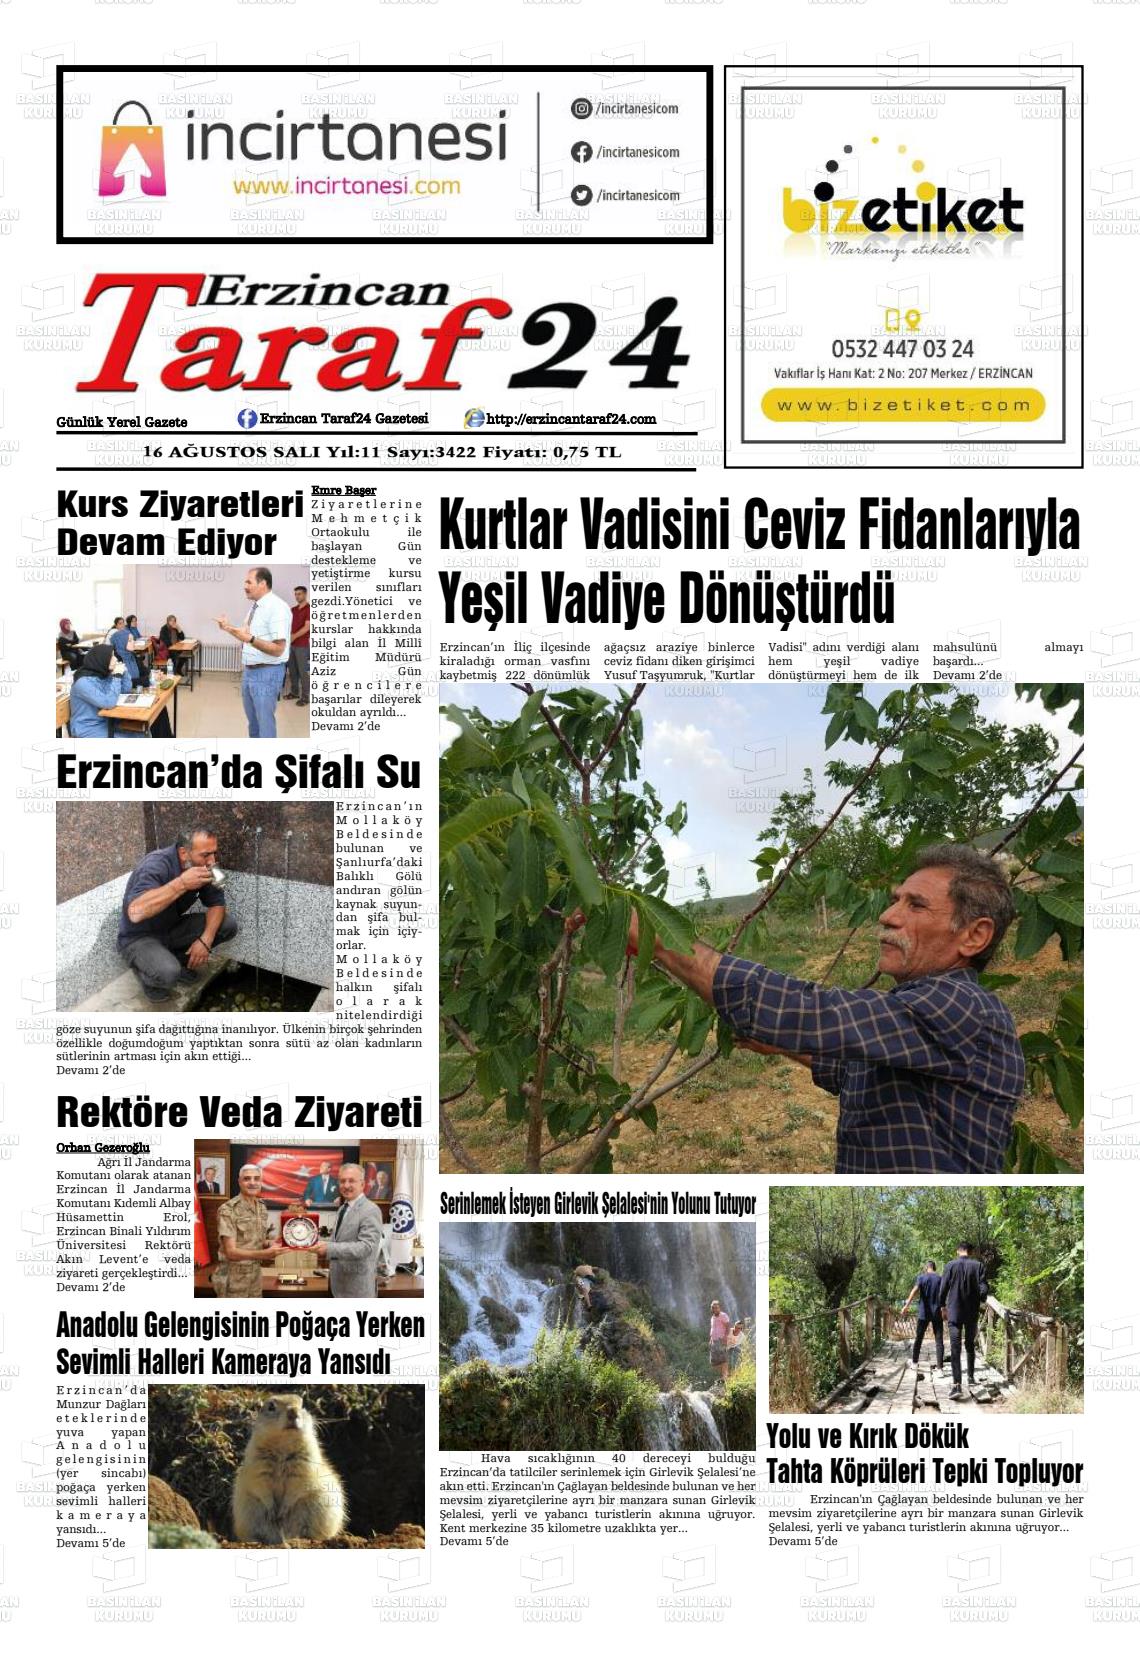 16 Ağustos 2022 Erzincan Taraf 24 Gazete Manşeti